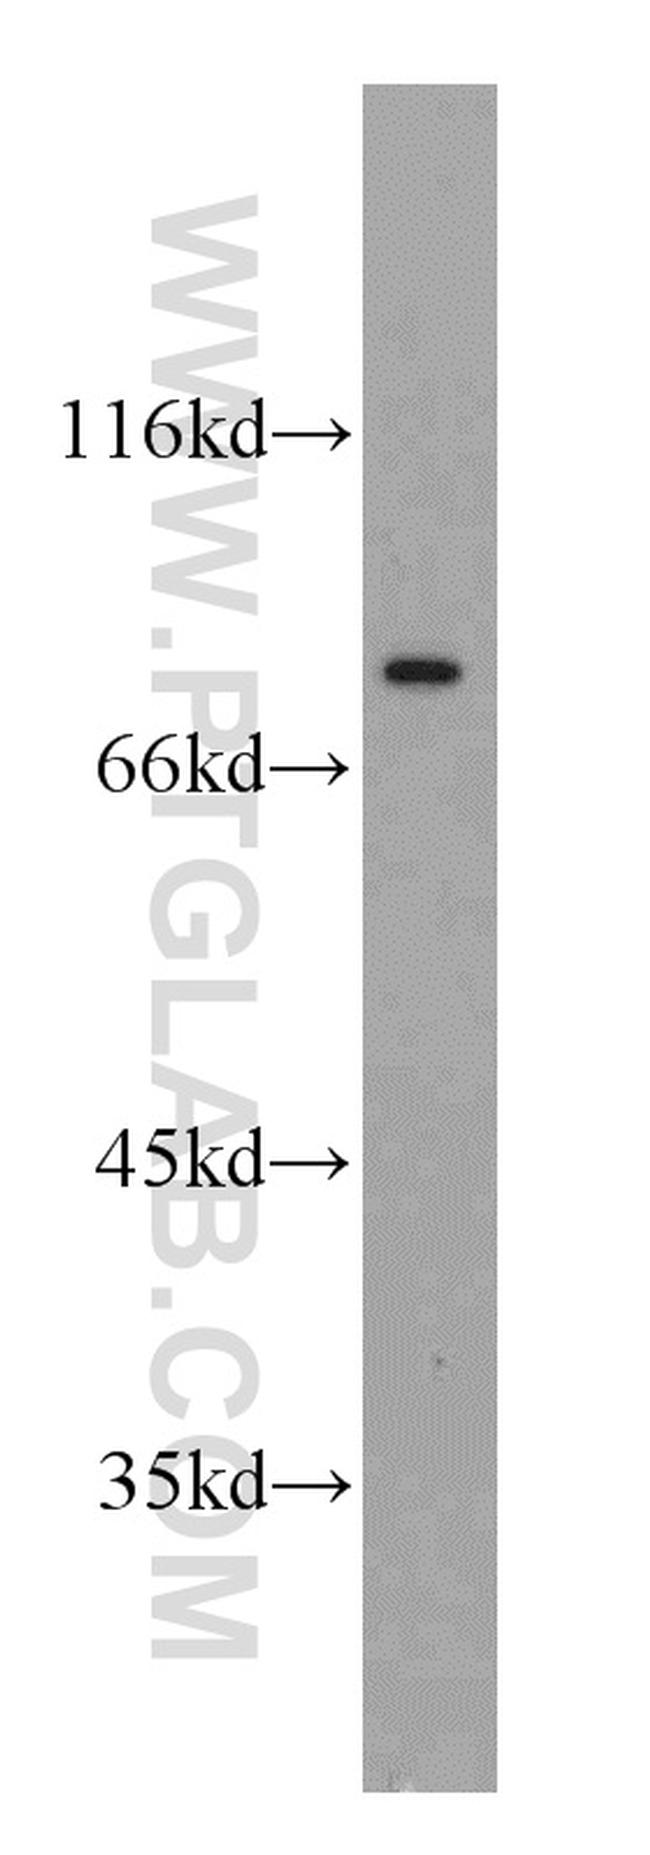 NUP88 Antibody in Western Blot (WB)